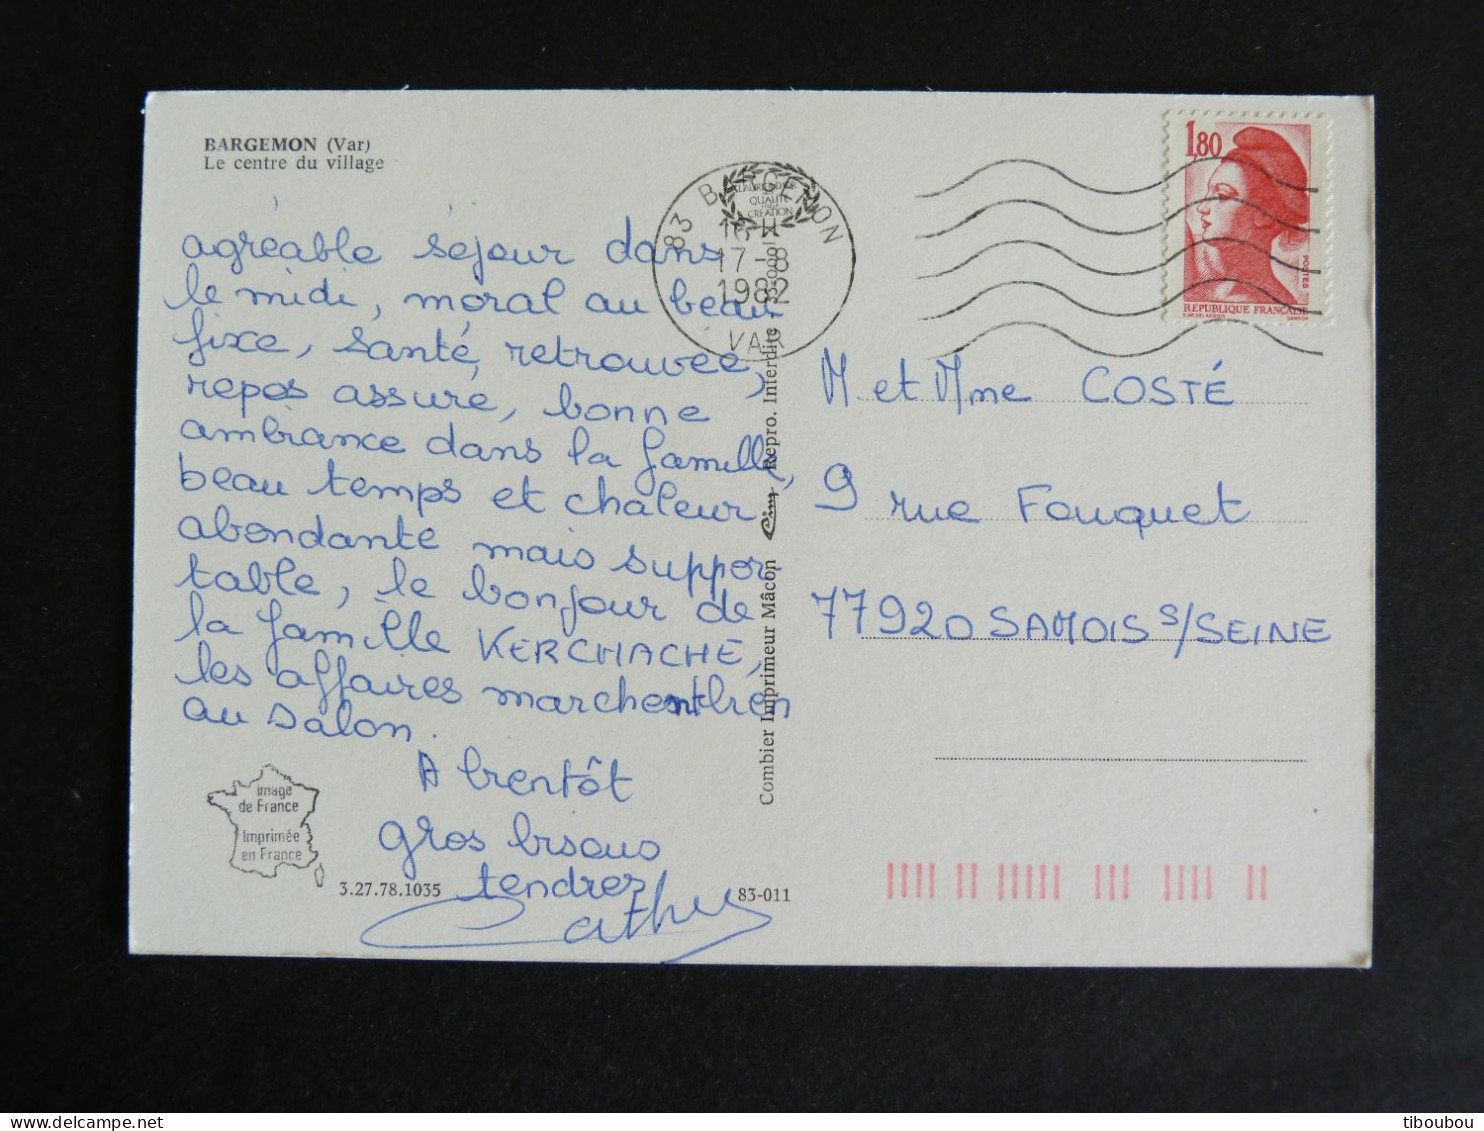 BARGEMON - VAR - FLAMME MUETTE SUR LIBERTE GANDON - LE CENTRE DU VILLAGE - Mechanical Postmarks (Advertisement)